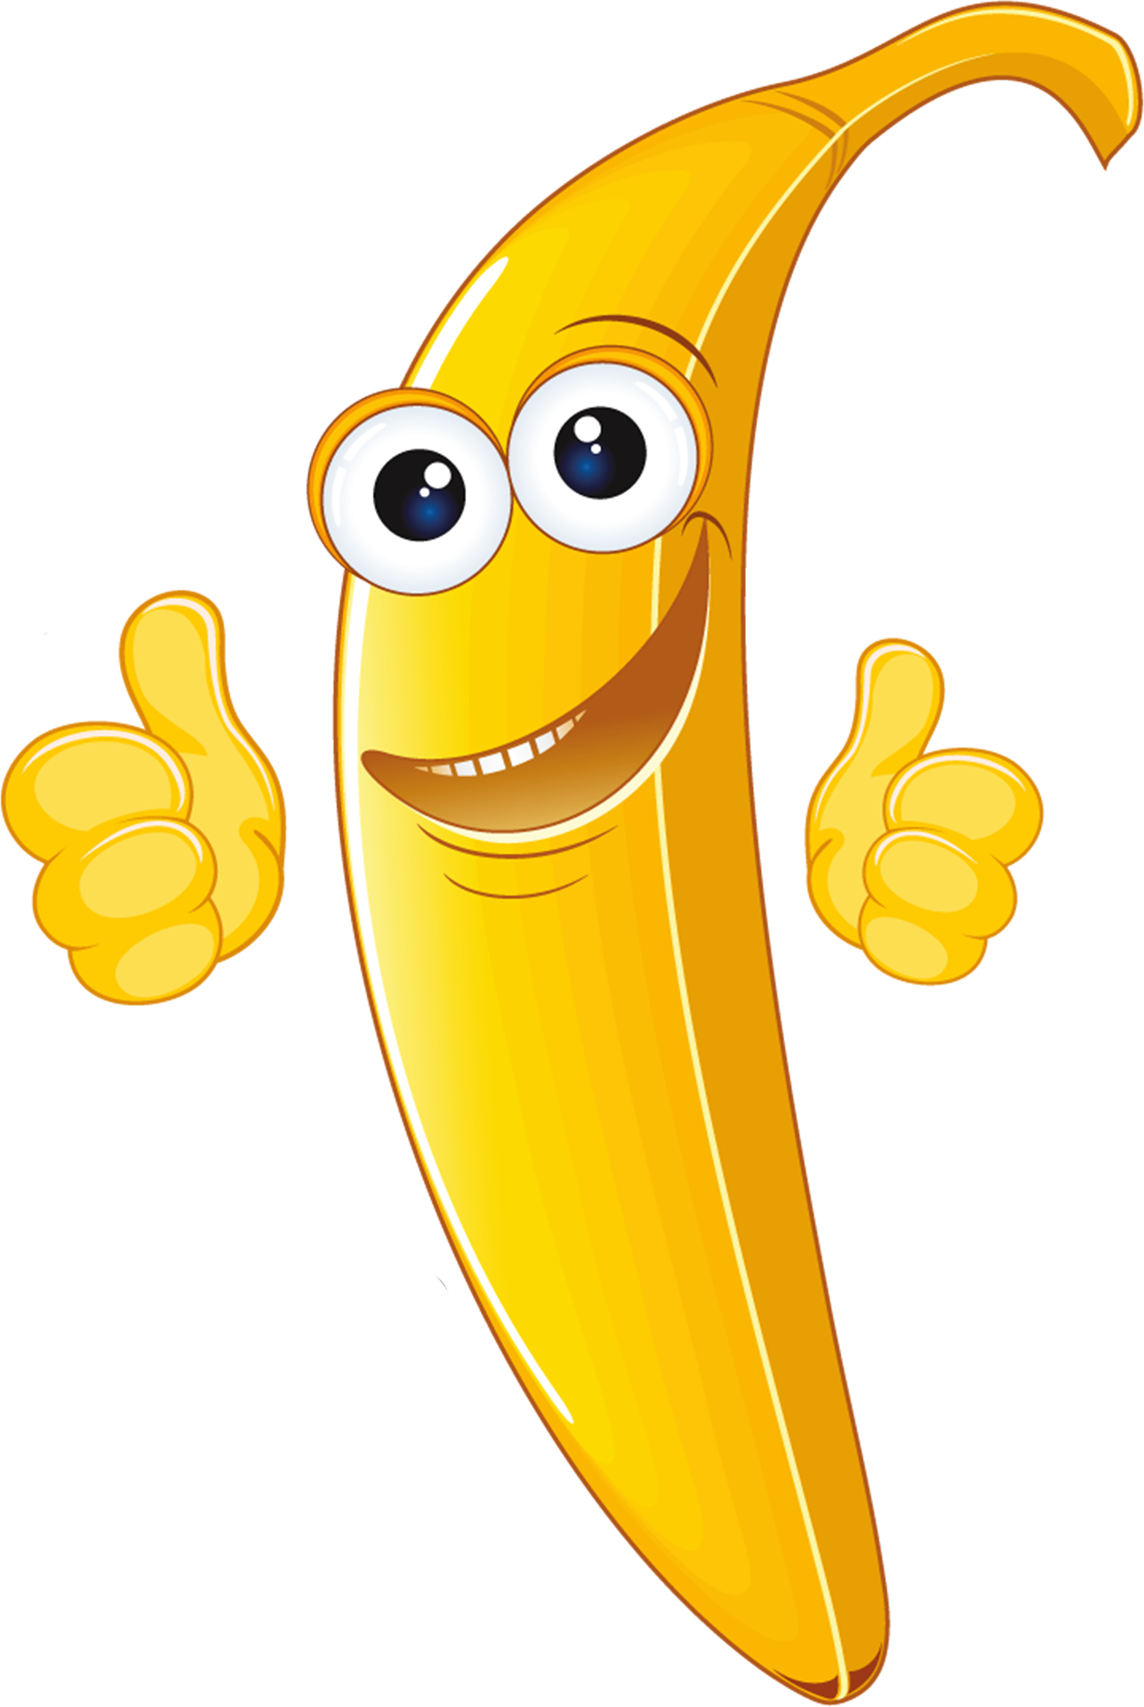 Smiling Animation Banana Cartoon Free Download Image Clipart